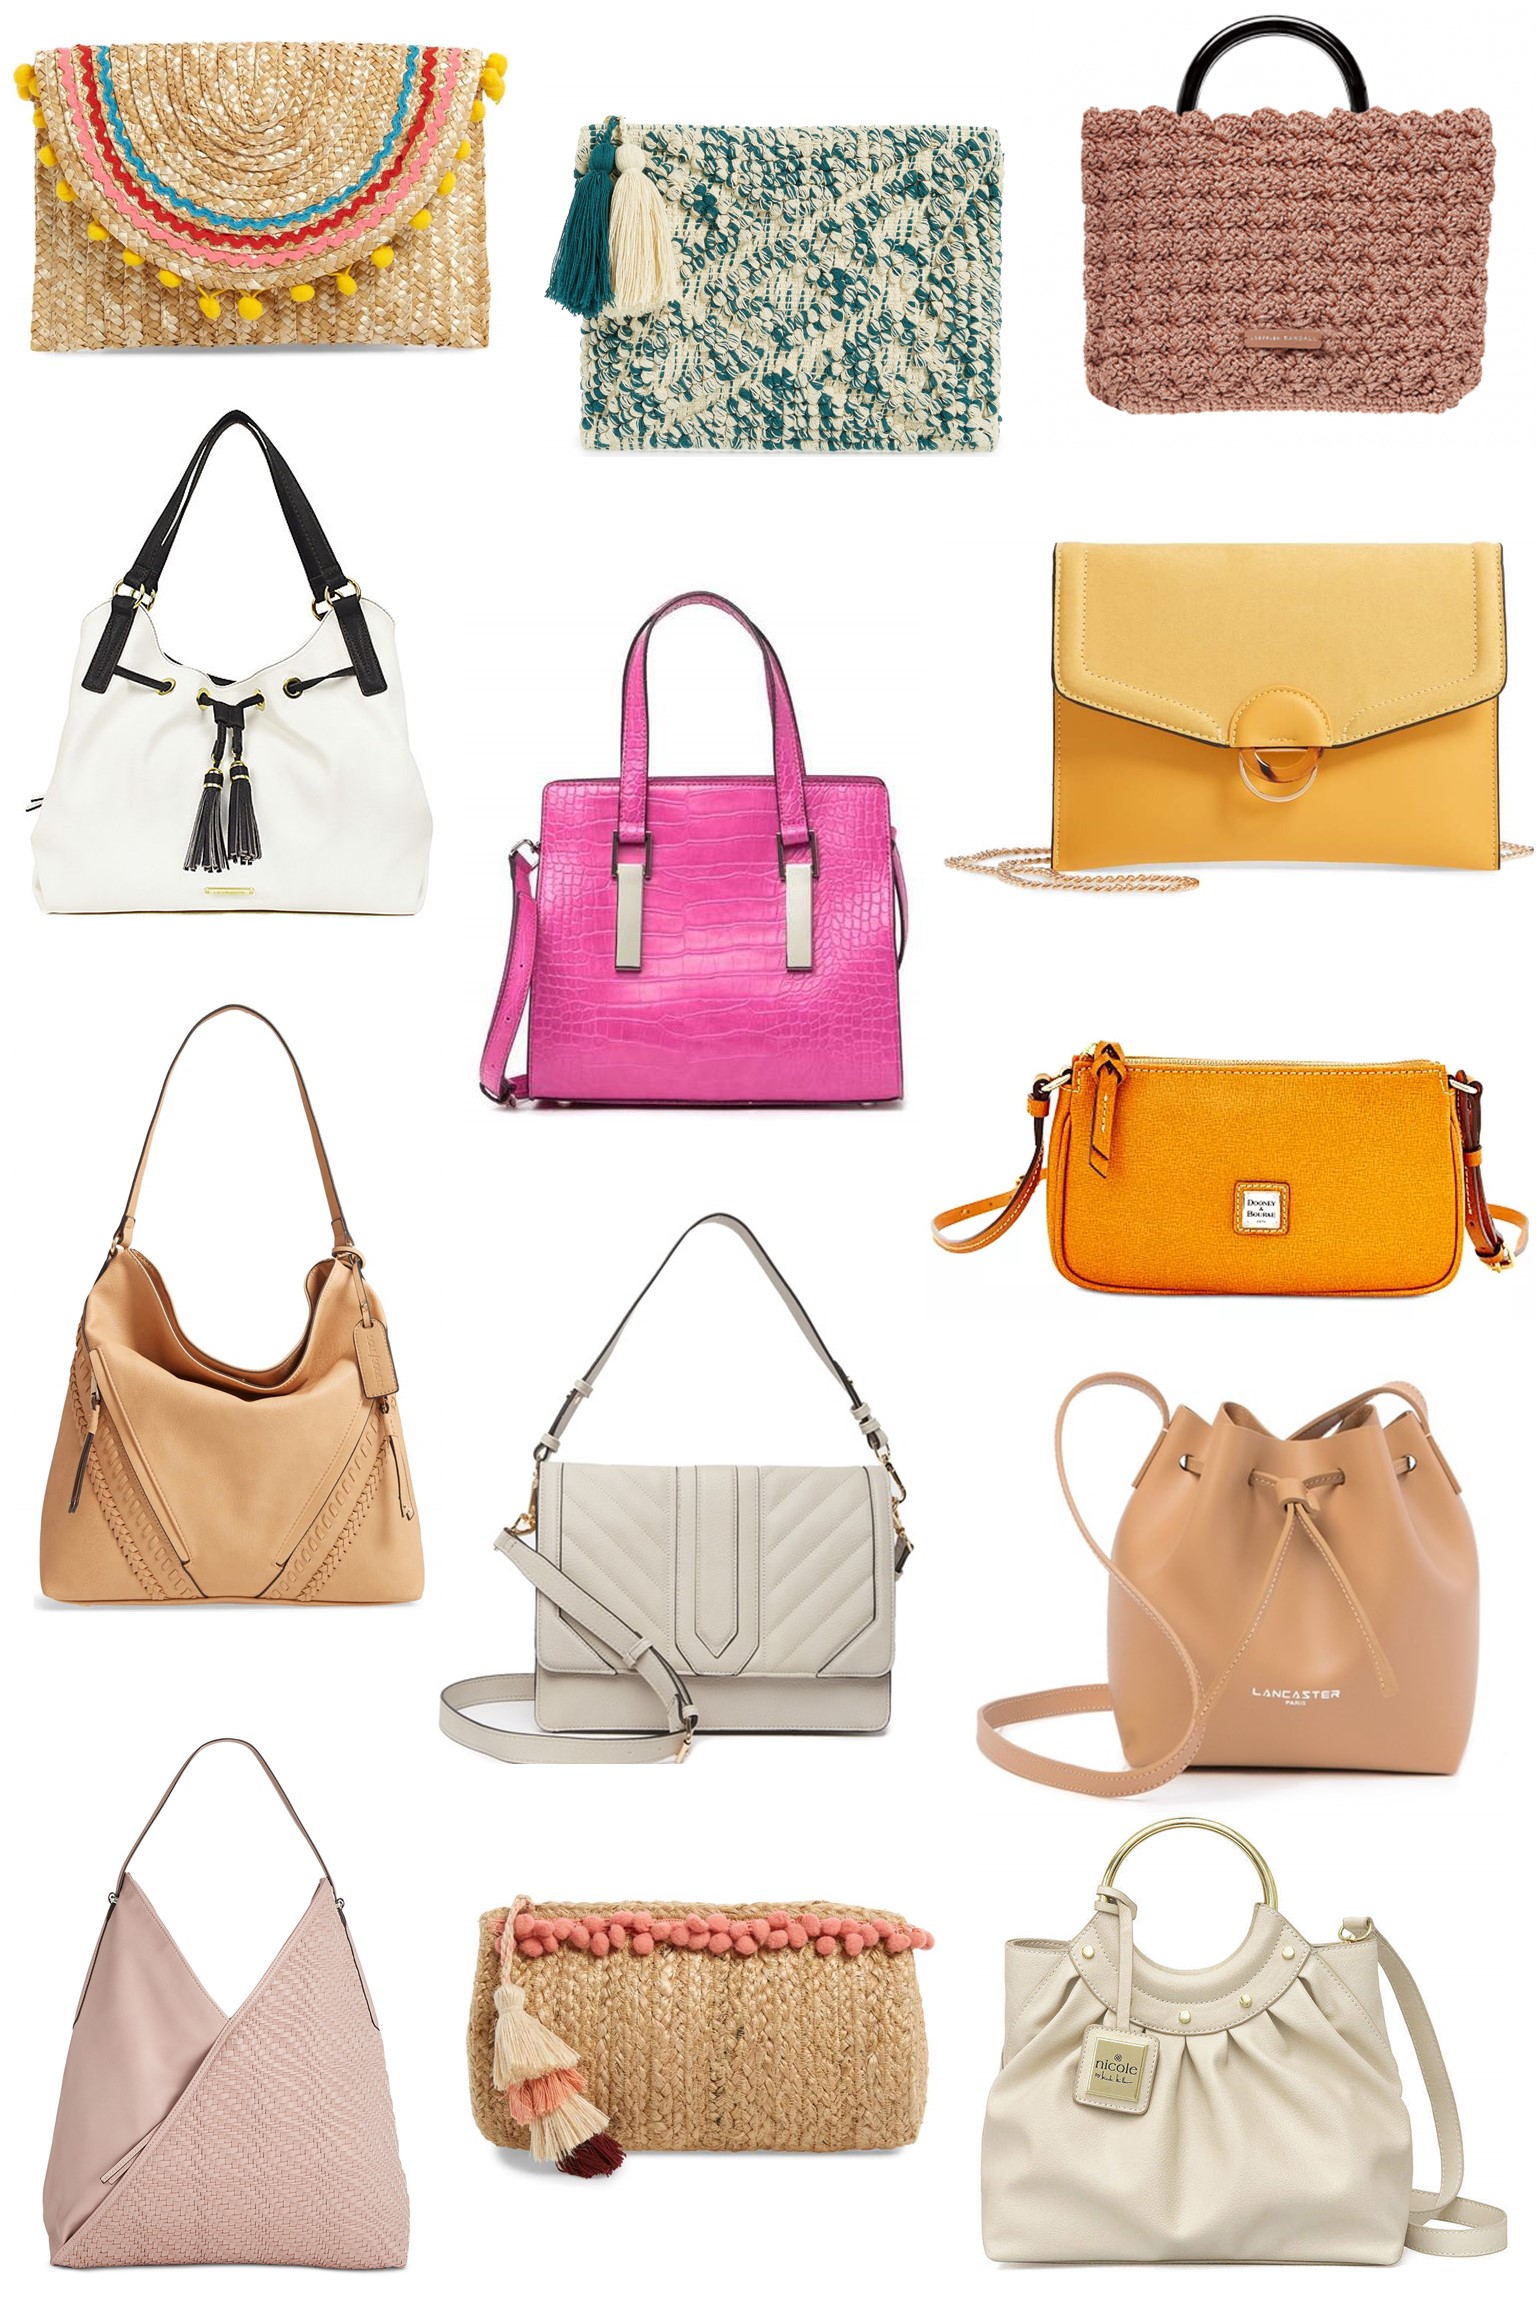 13 Spring Handbags That Won’t Break the Bank